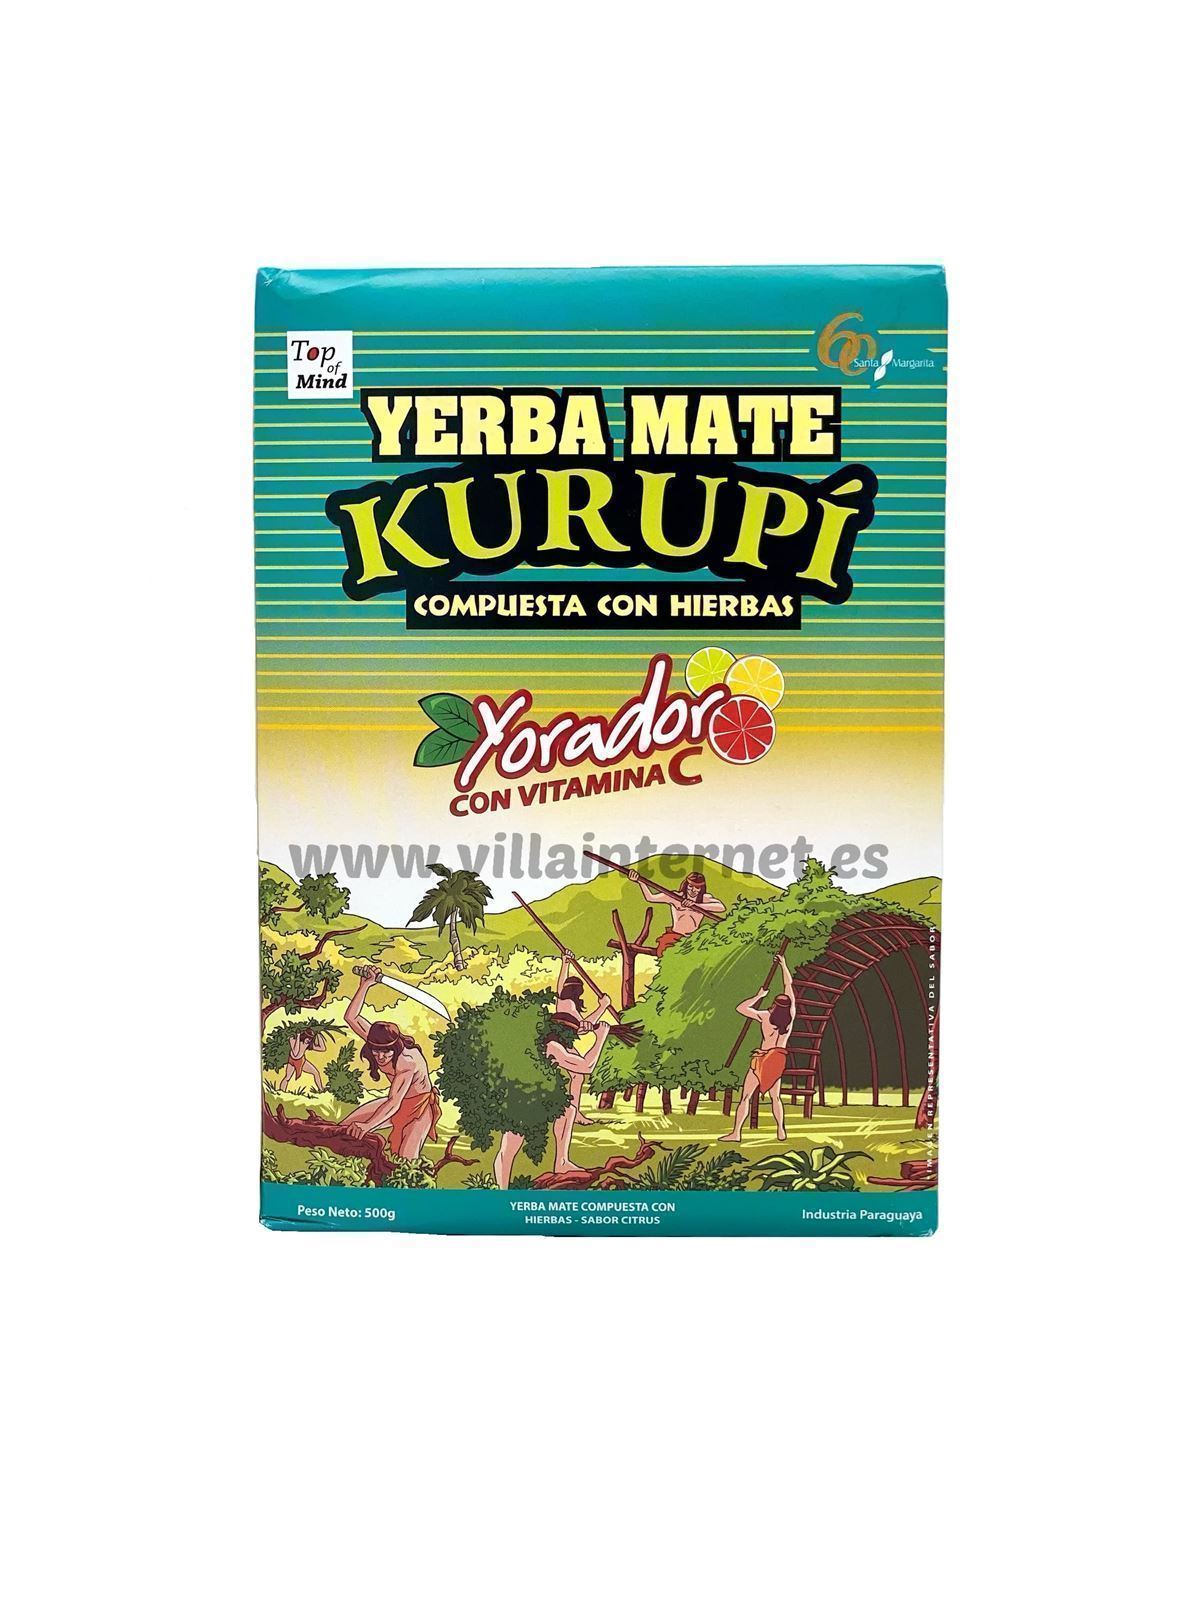 Yerba mate Kurupí yorador con vitamina C 500g - Imagen 1